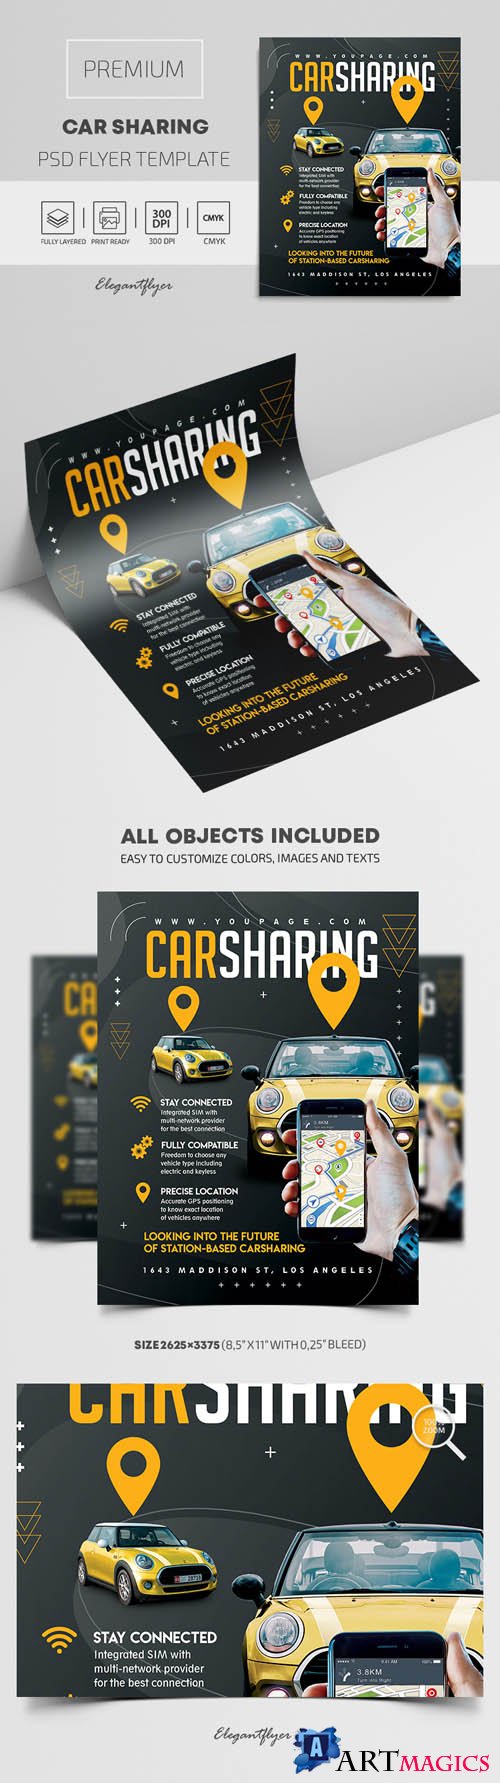 Car Sharing Premium PSD Flyer Template